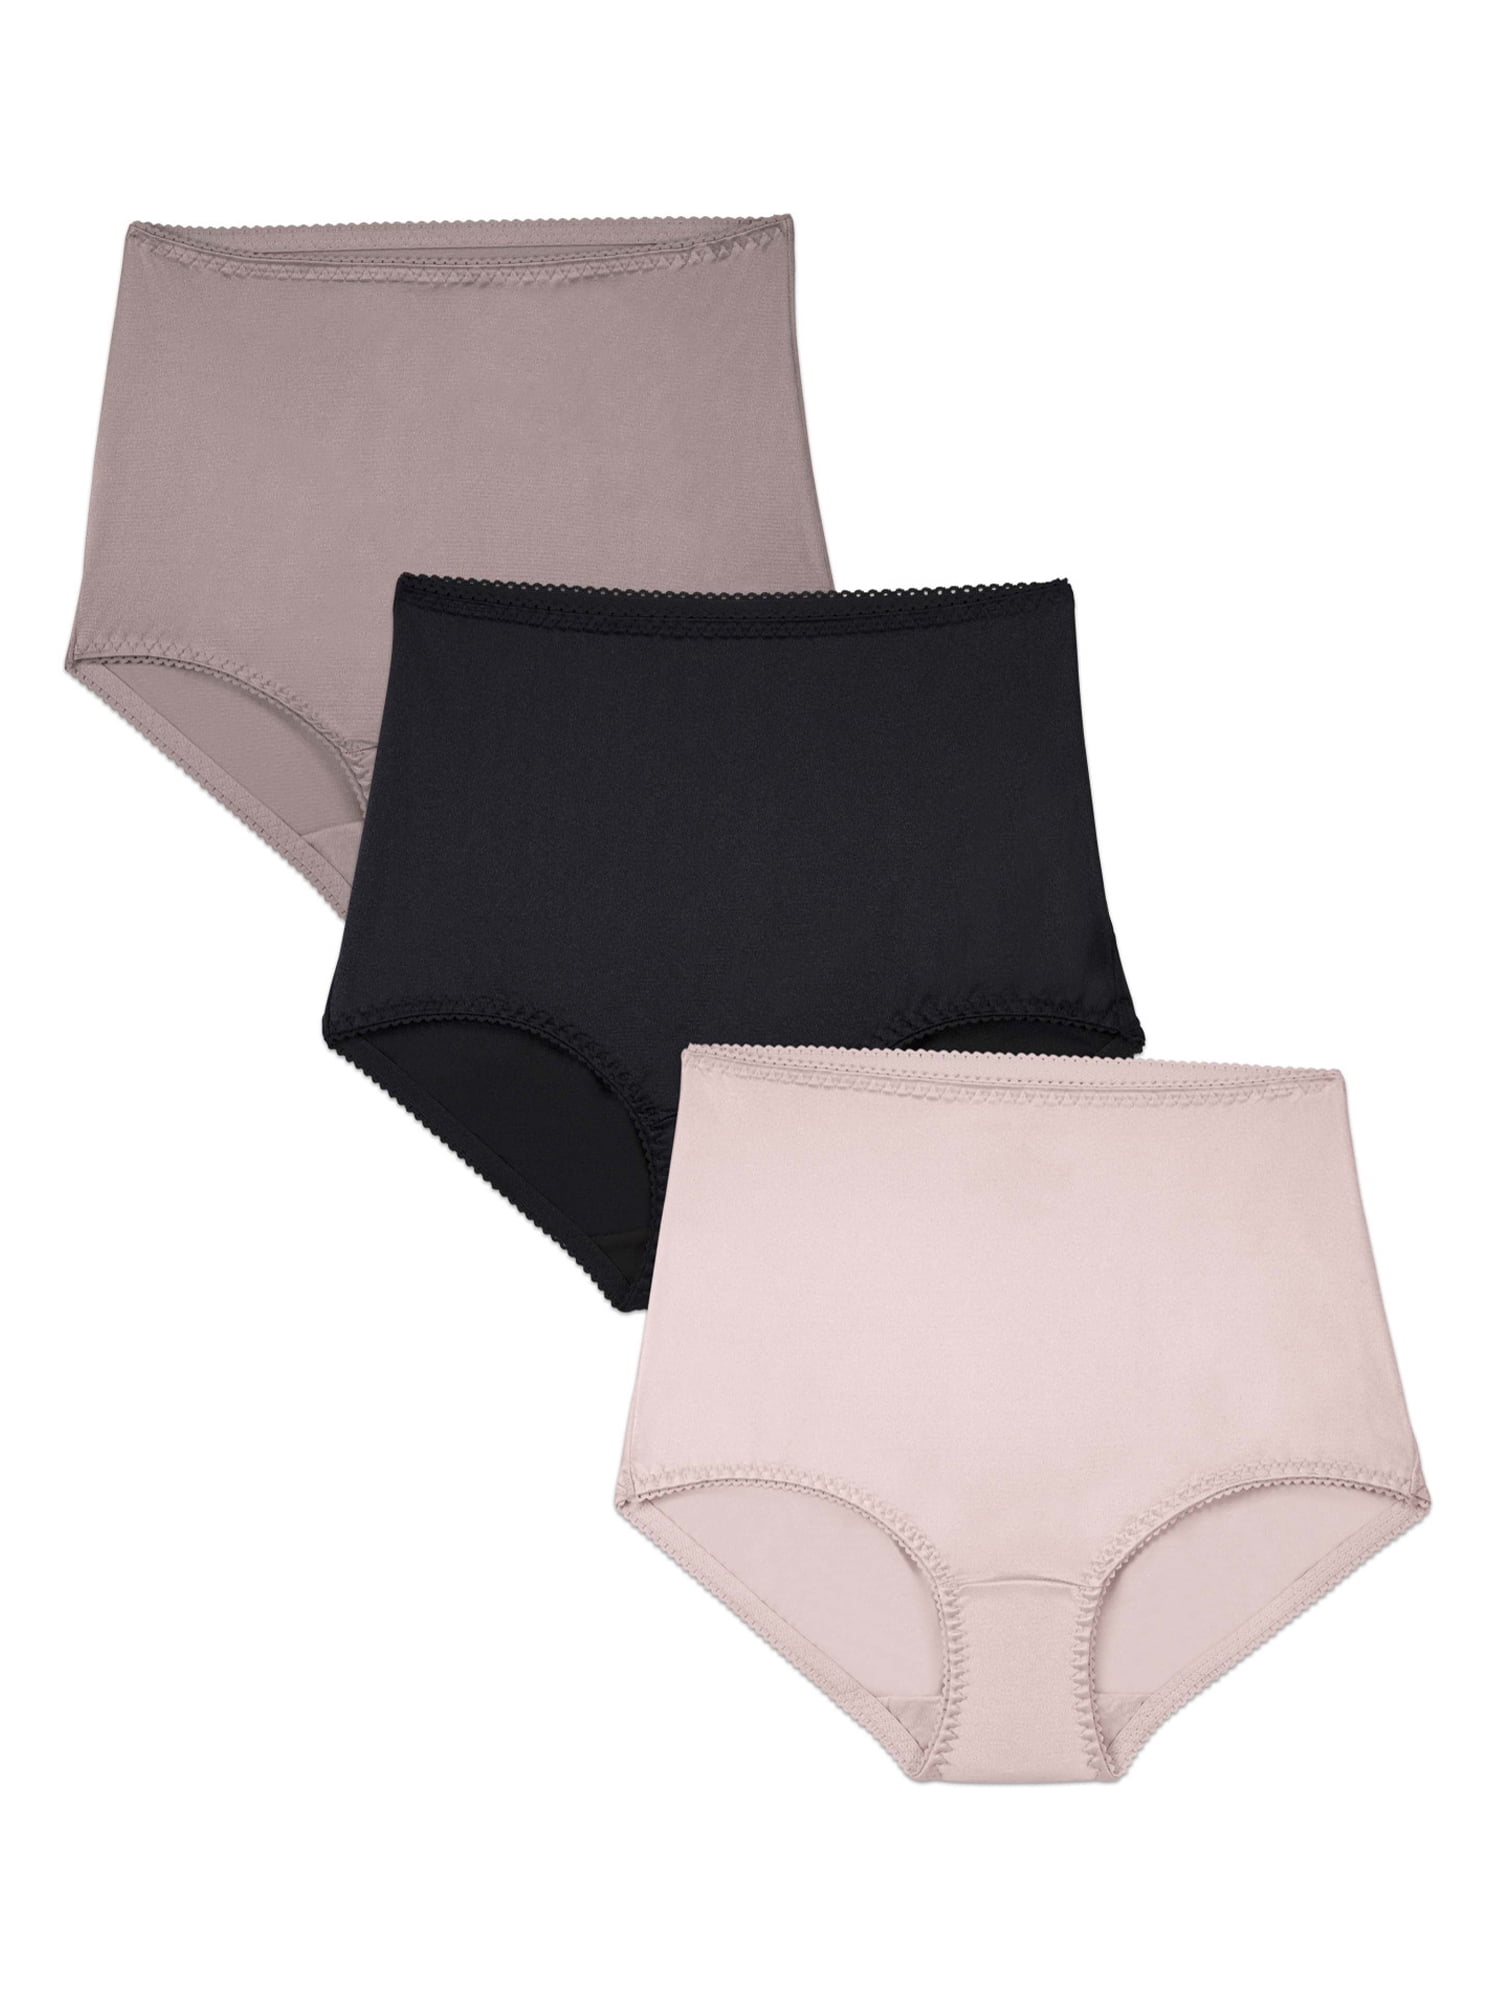 3 Maidenform Microfiber Boyshort Underwear Panty Multi 40760 Sz 8/XL - NWT